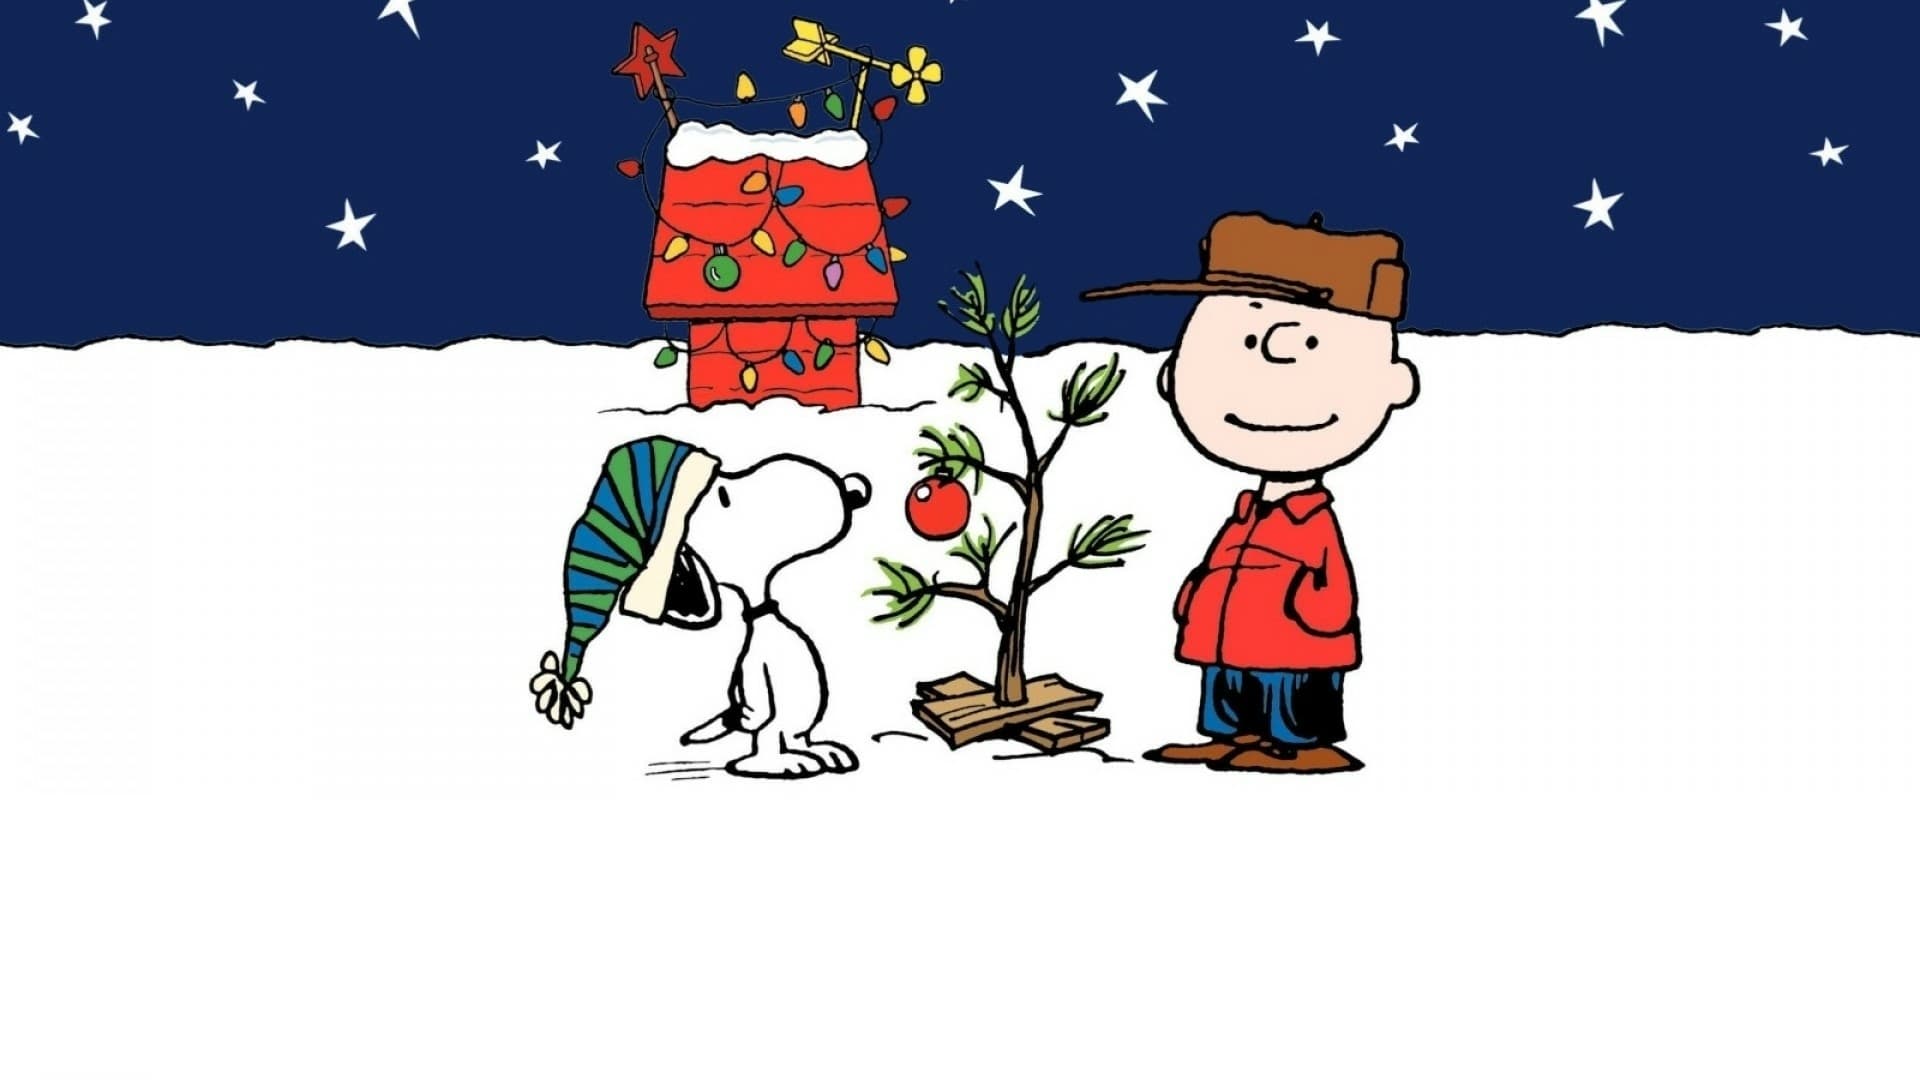 Charlie Brown Christmas Wallpaper Desktop 42 images